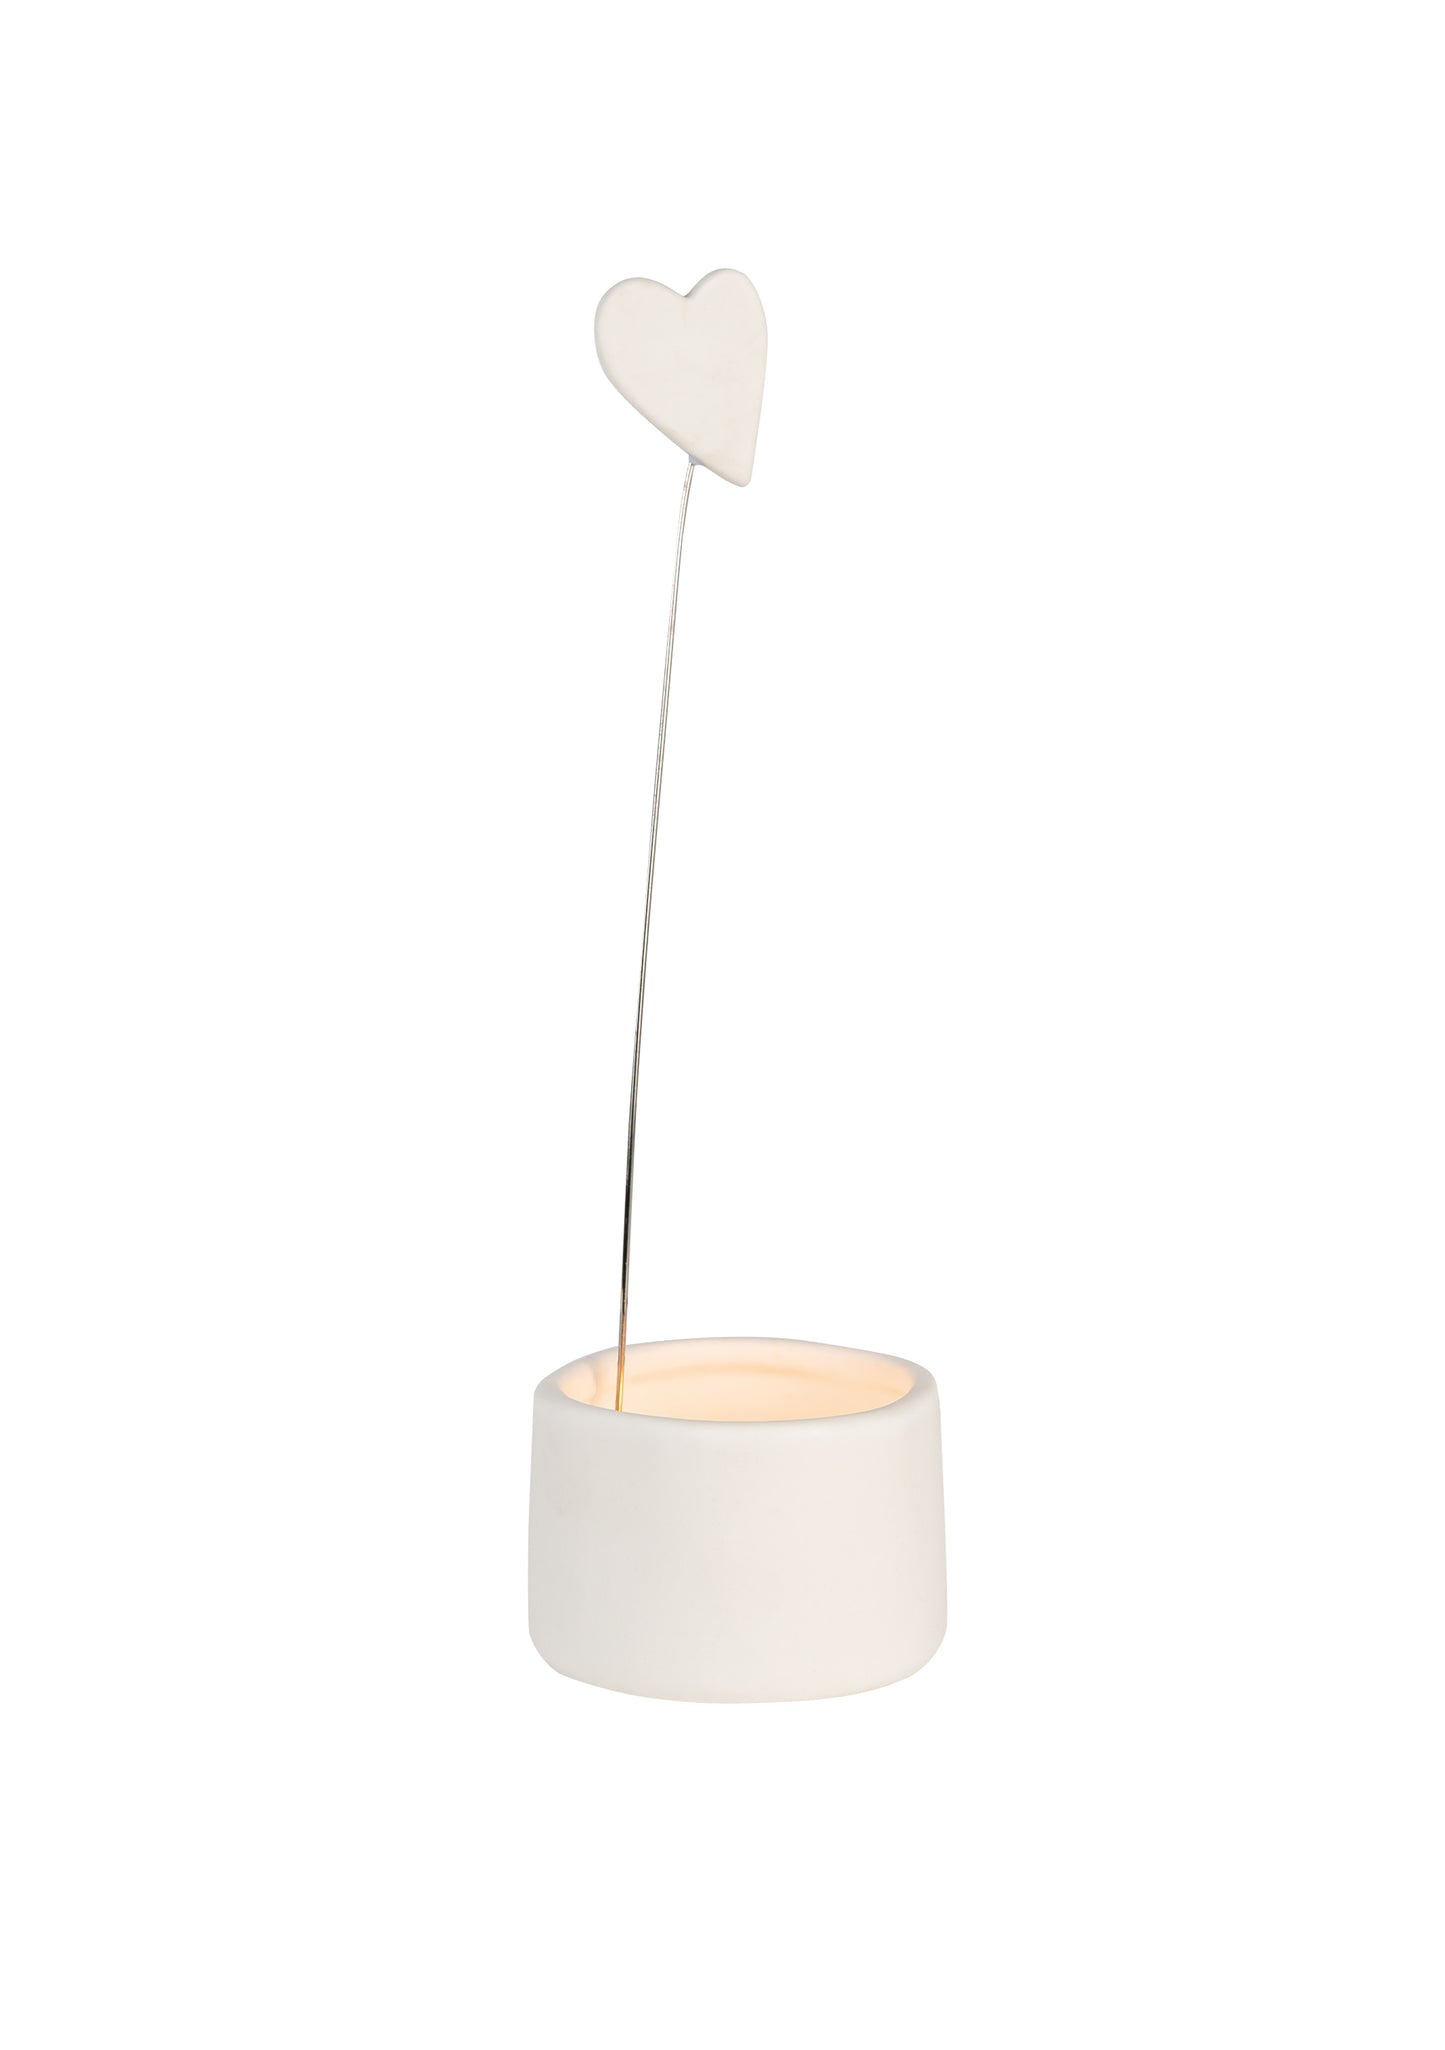 white porcelain tealight holder with suspended heart motif